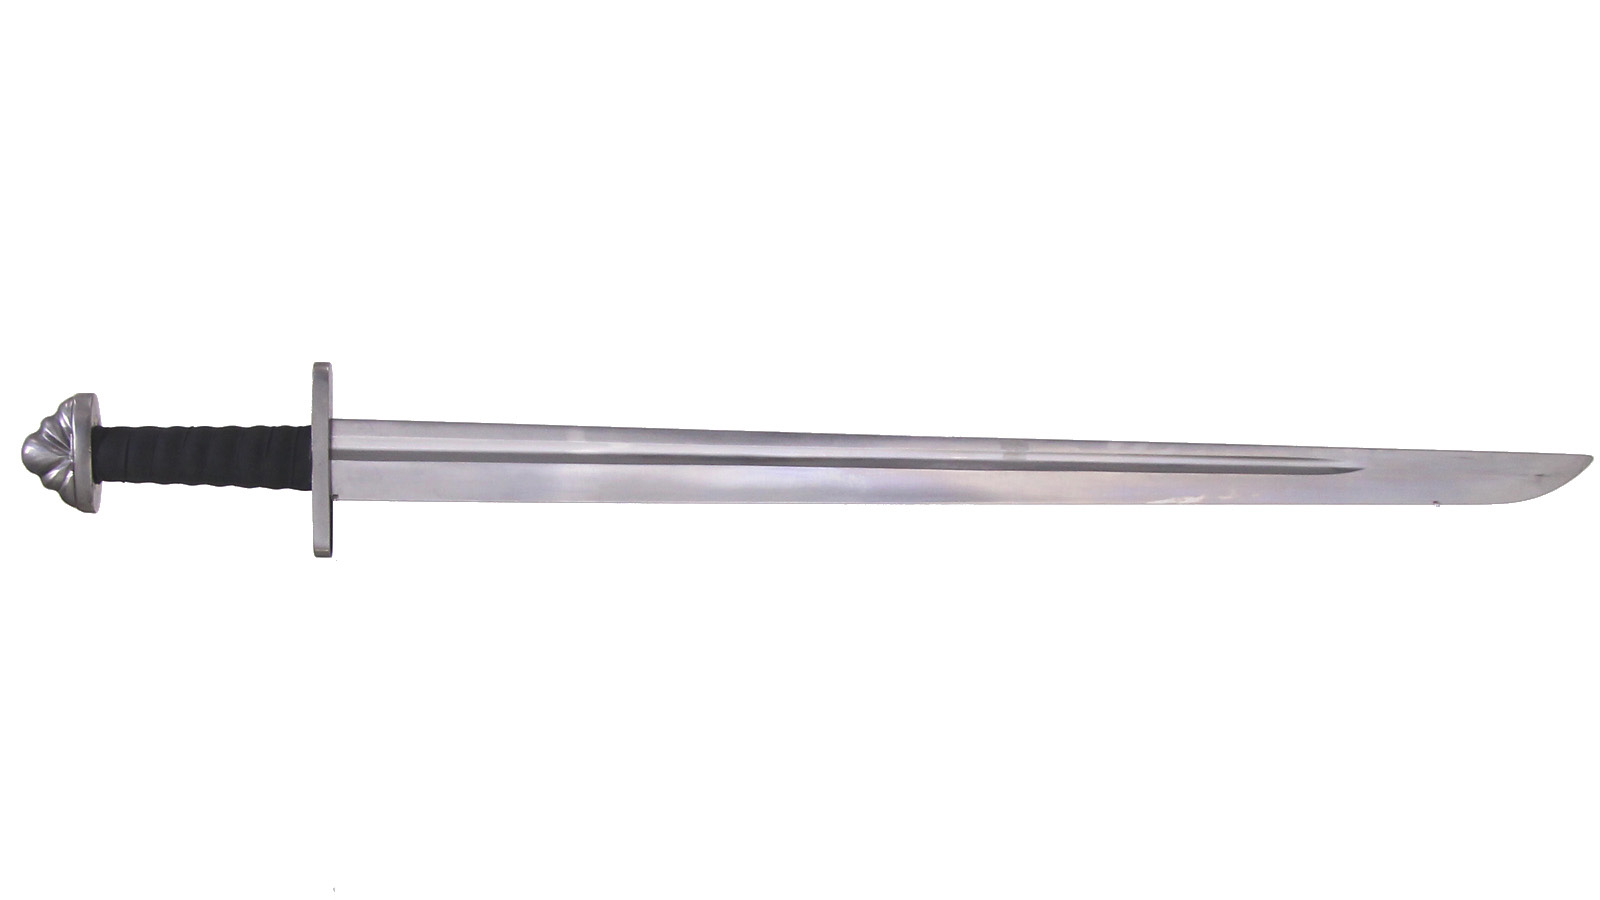 Viking sword, single edge, battle blade version